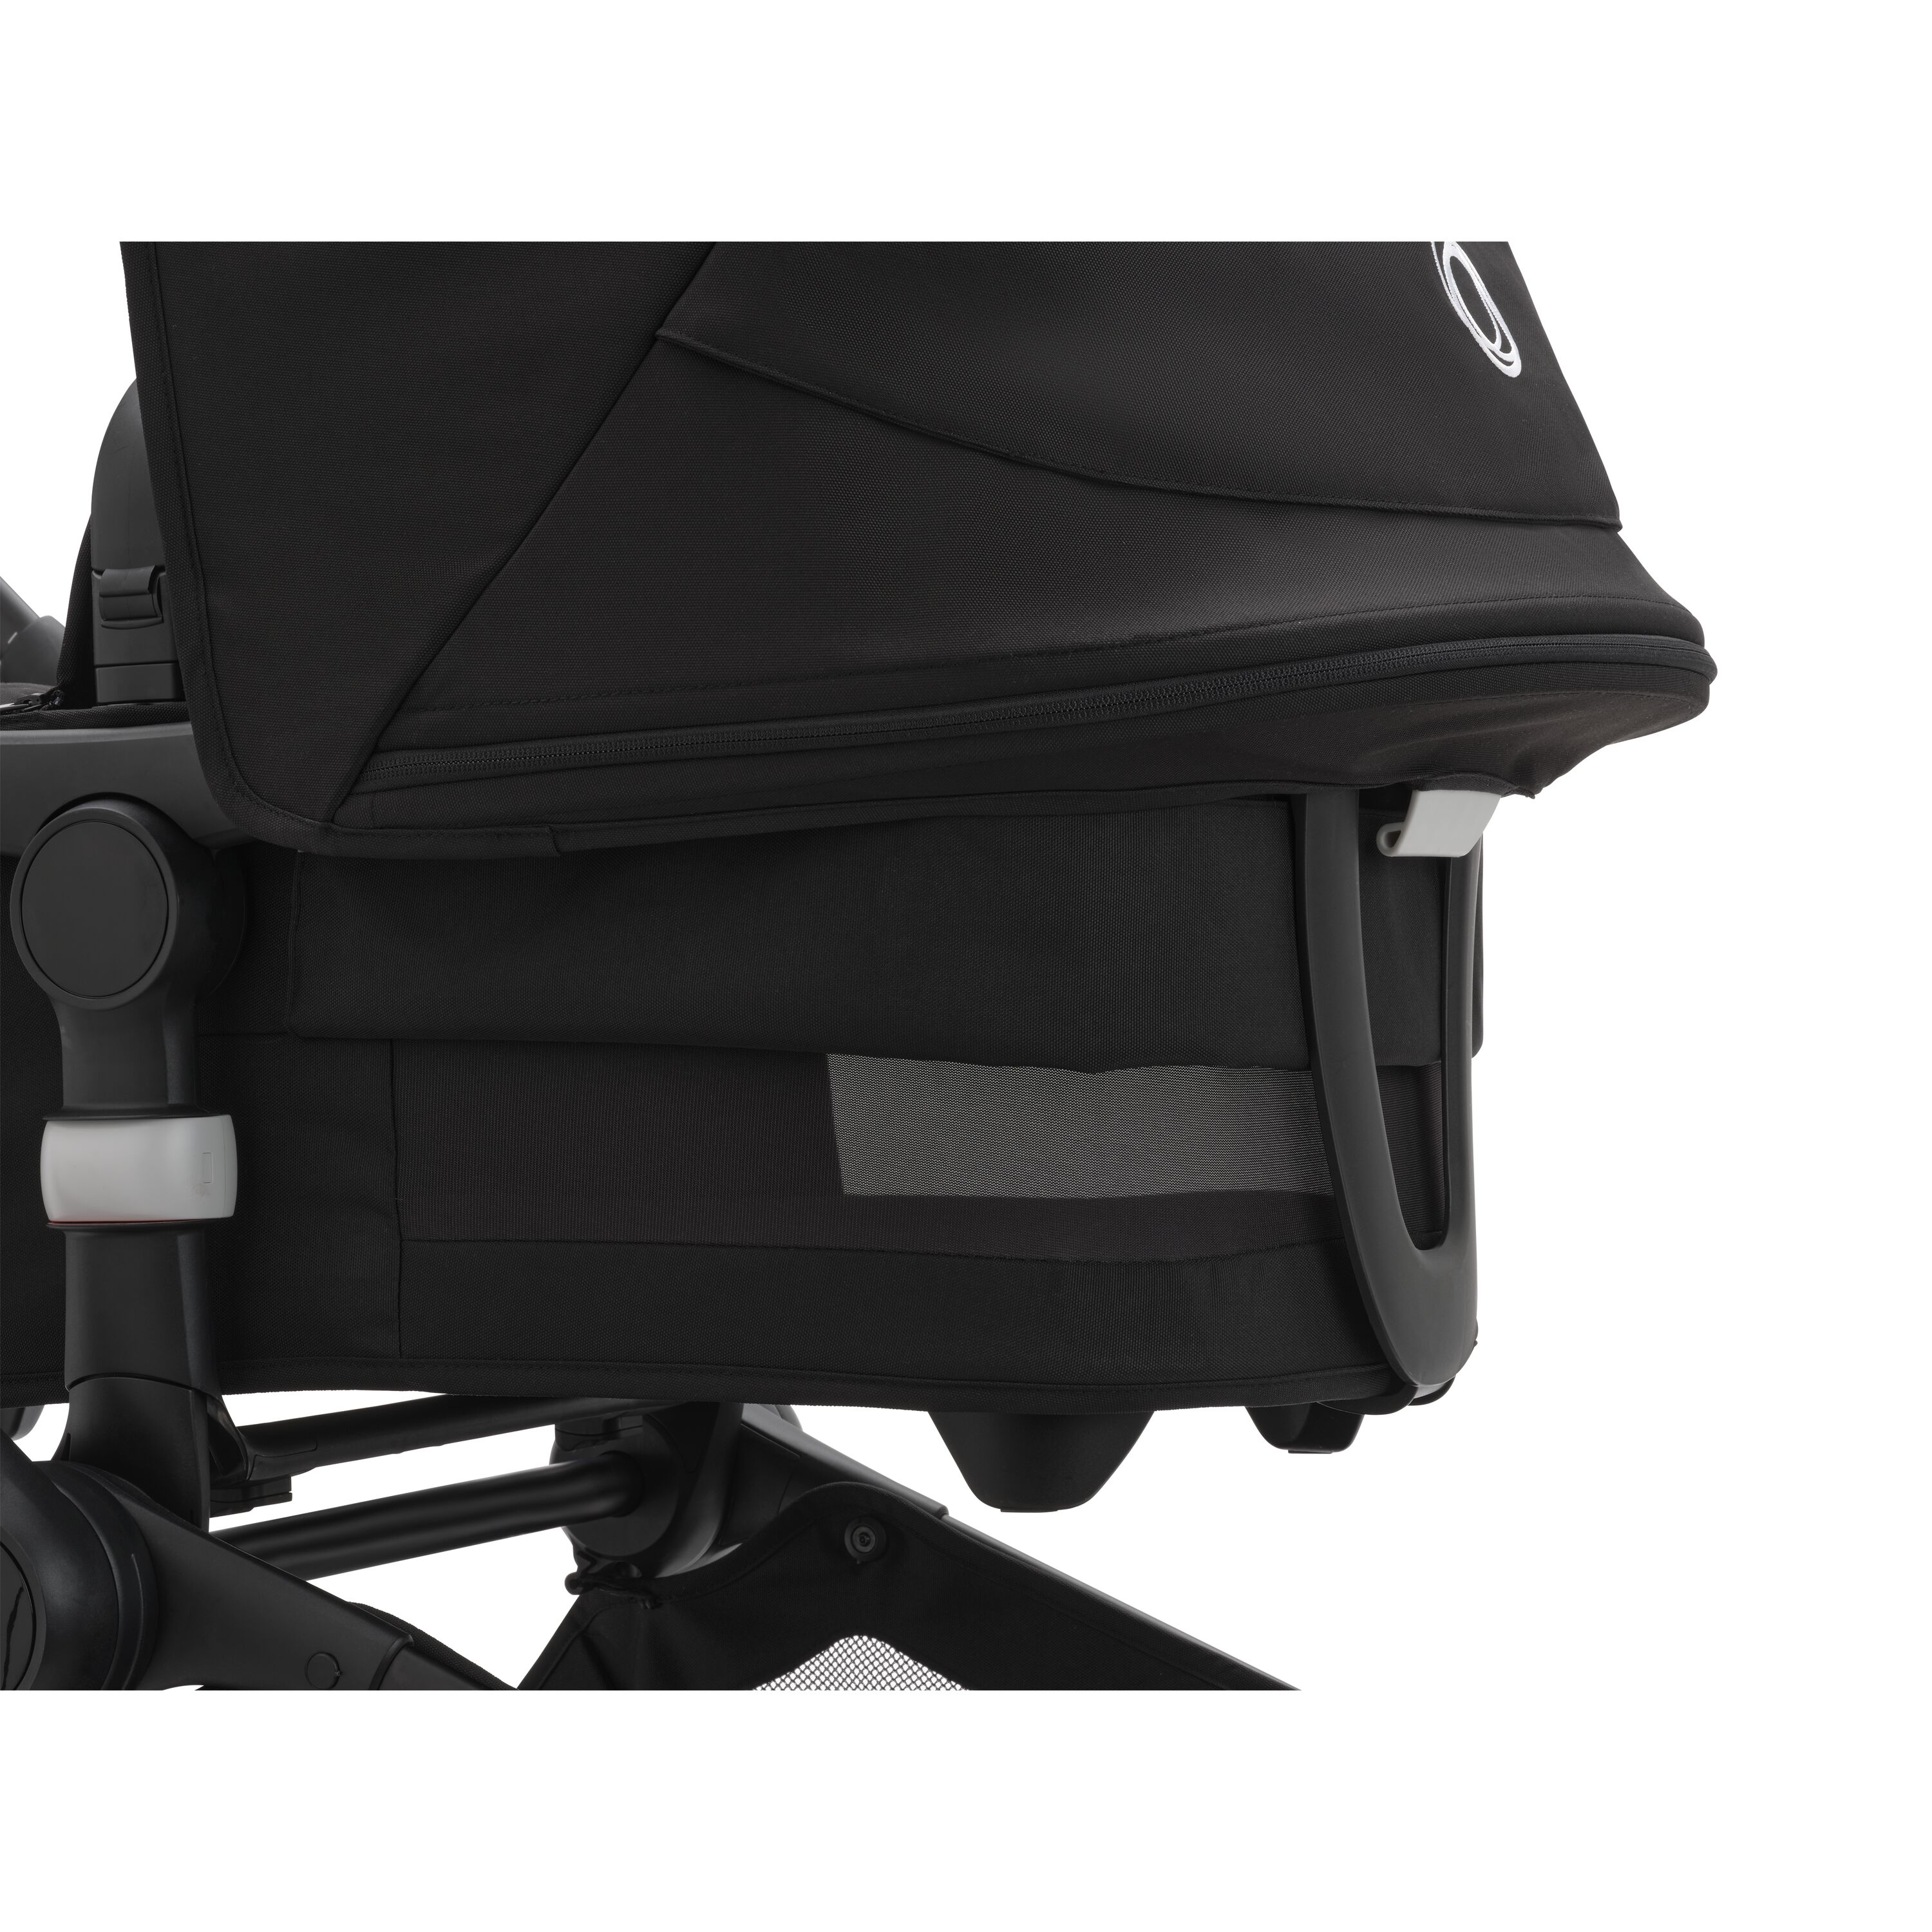 Bugaboo Fox 5 bassinet and seat stroller Midnight black sun canopy,  midnight black fabrics, black chassis